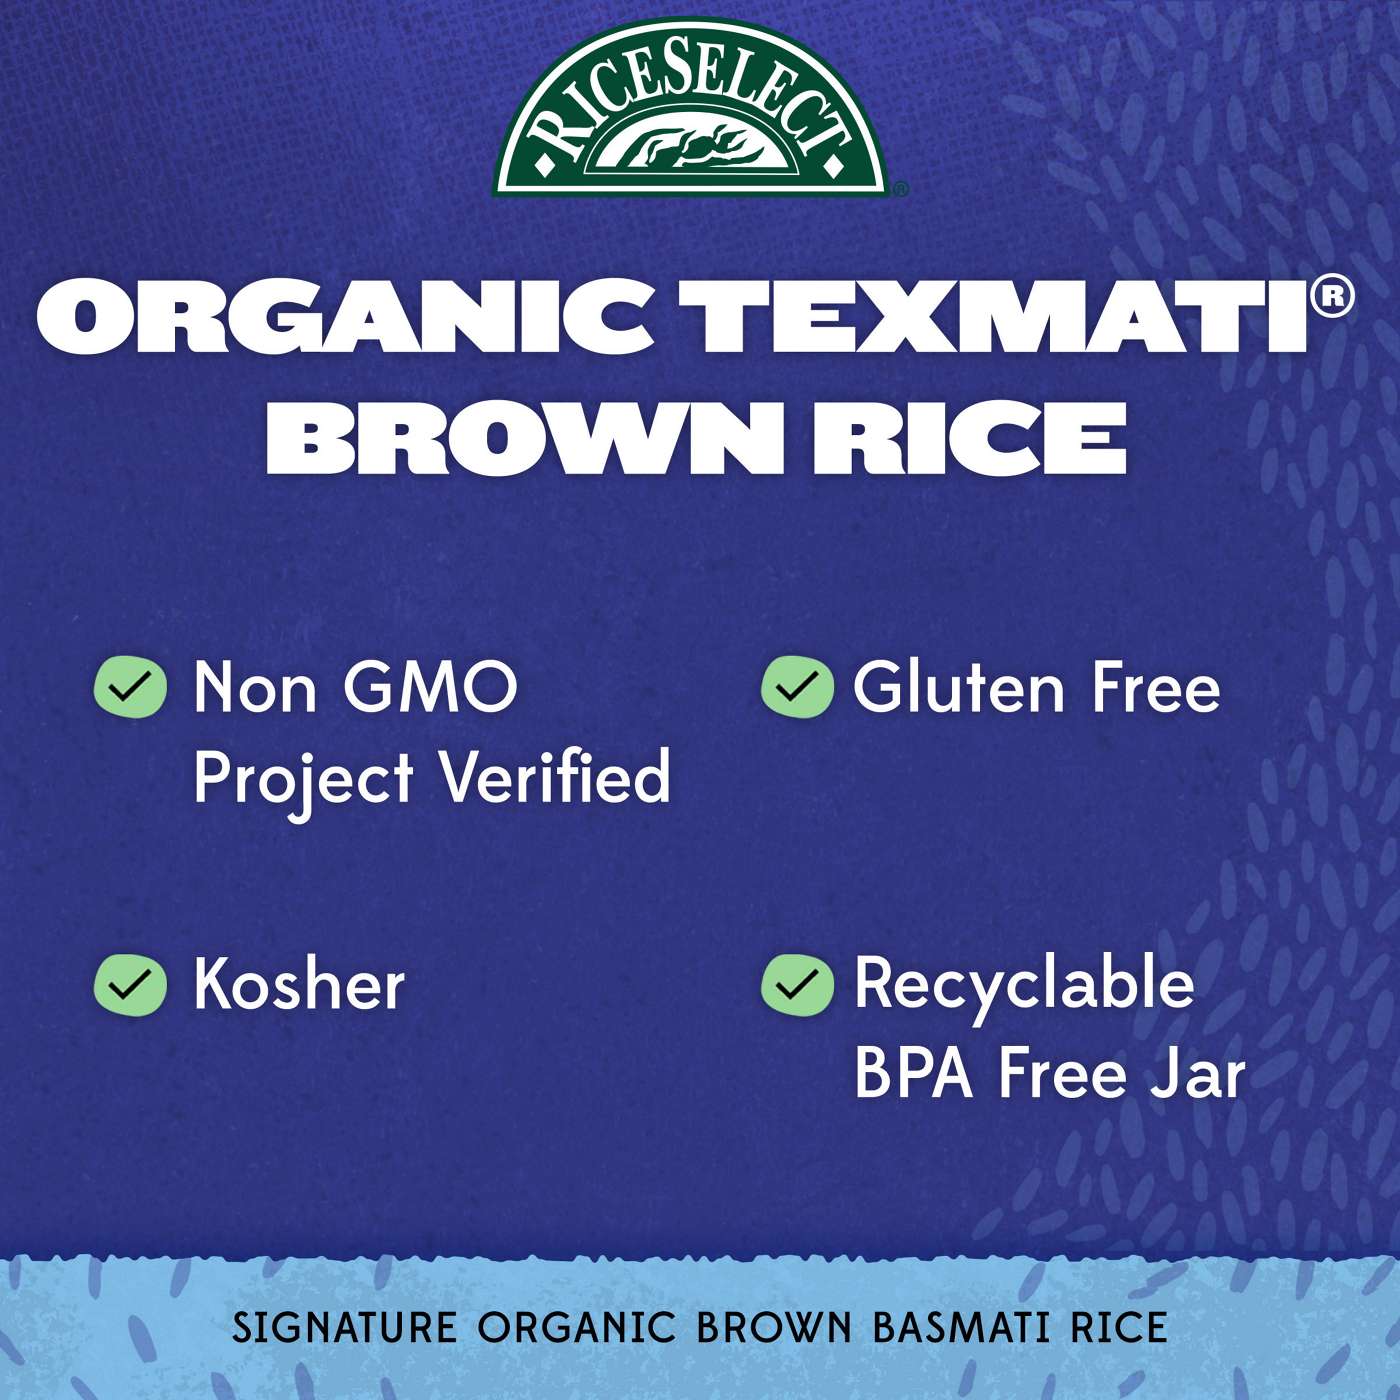 RiceSelect Organic Texmati Basmati Brown Rice; image 4 of 5